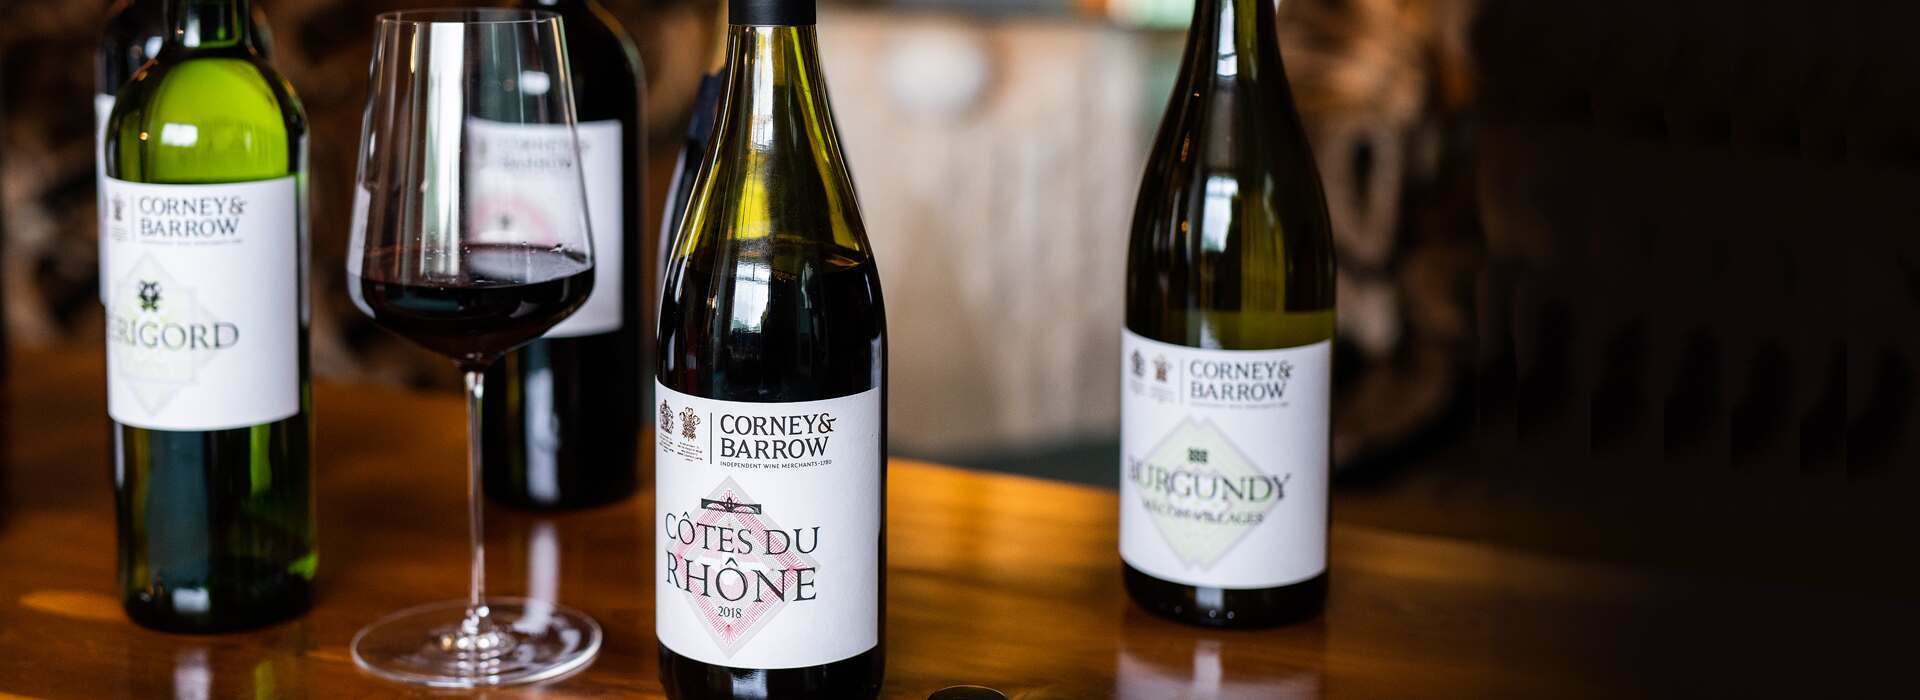 Corney & Barrow Own Label Wines